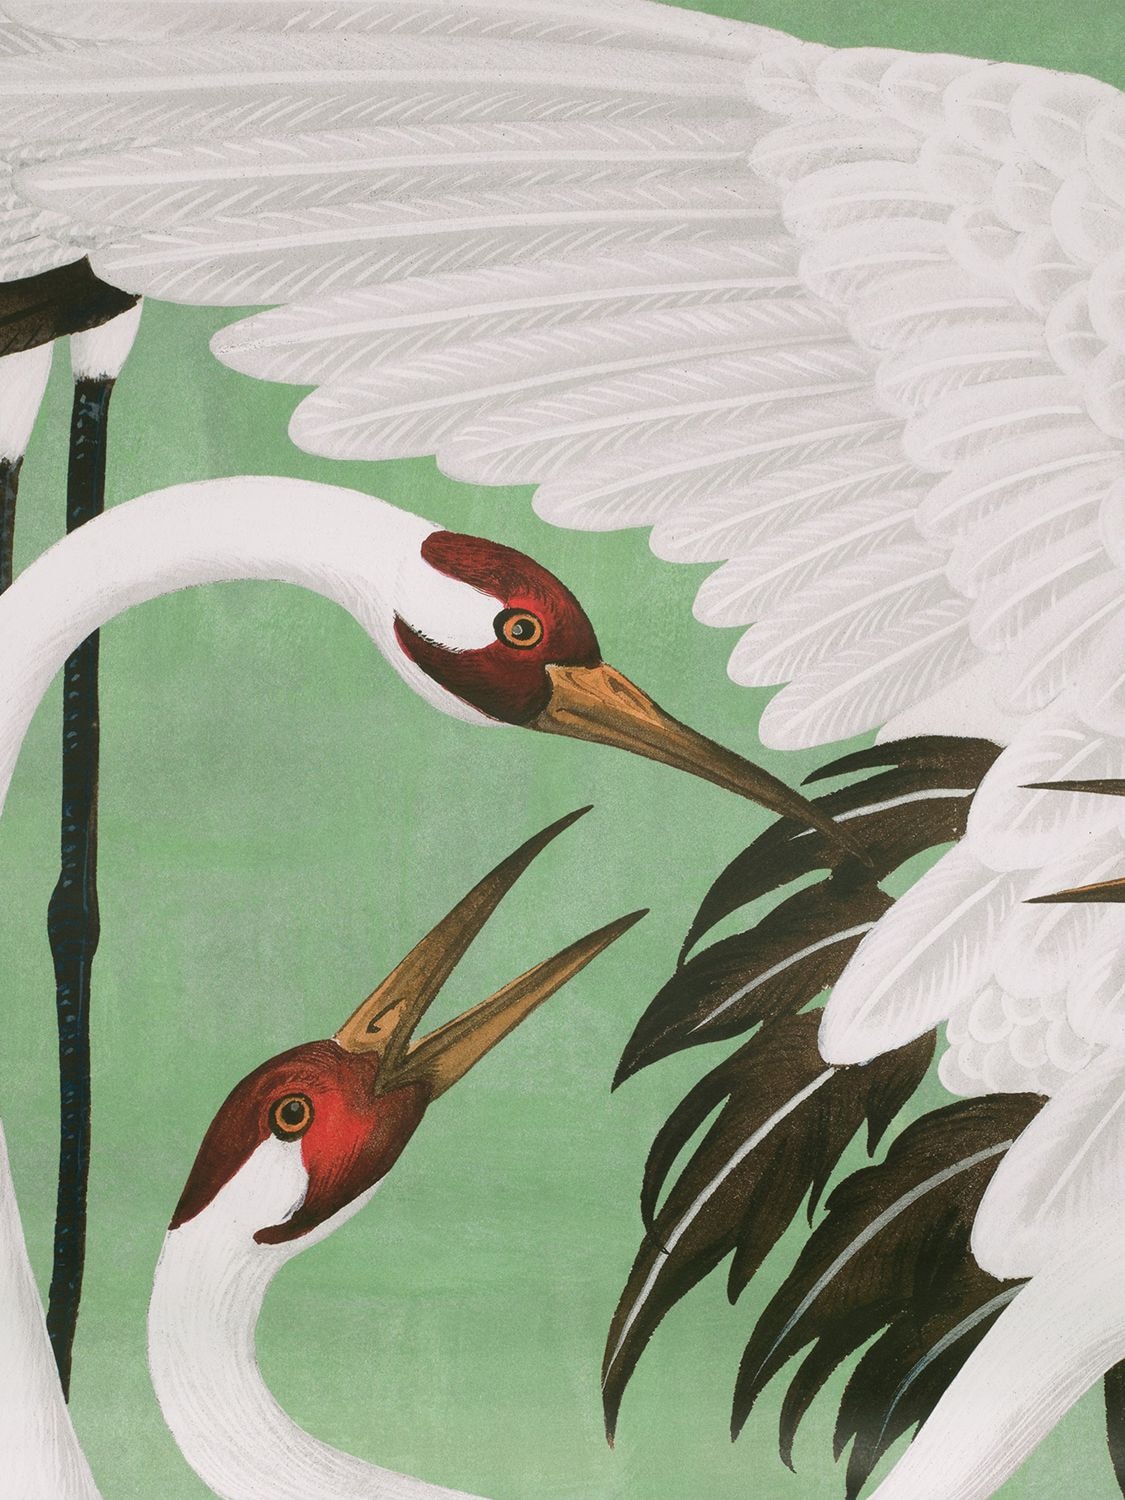 Heron Printed Wallpaper Panels